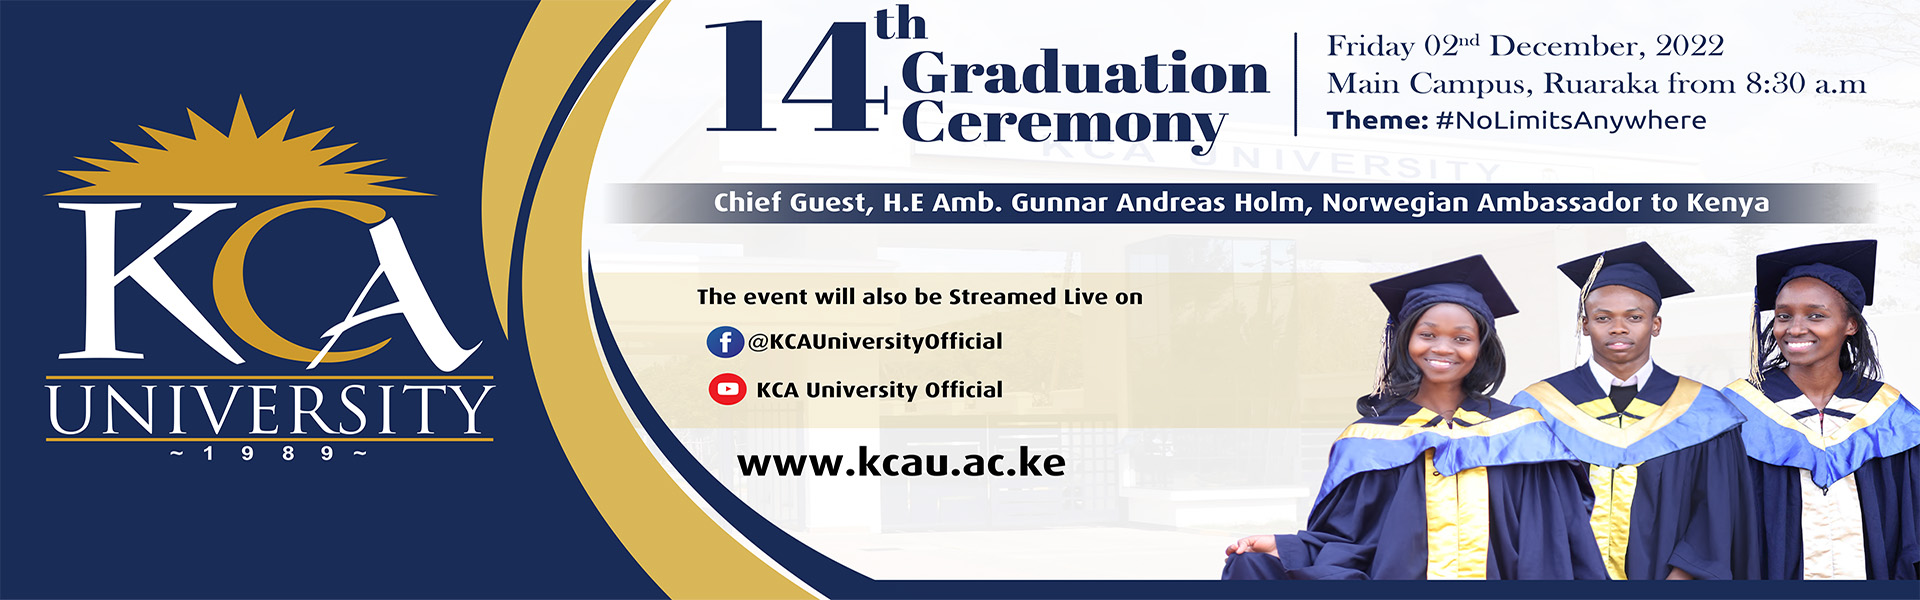 KCA-University-14th-Graduation-Ceremony-Banner